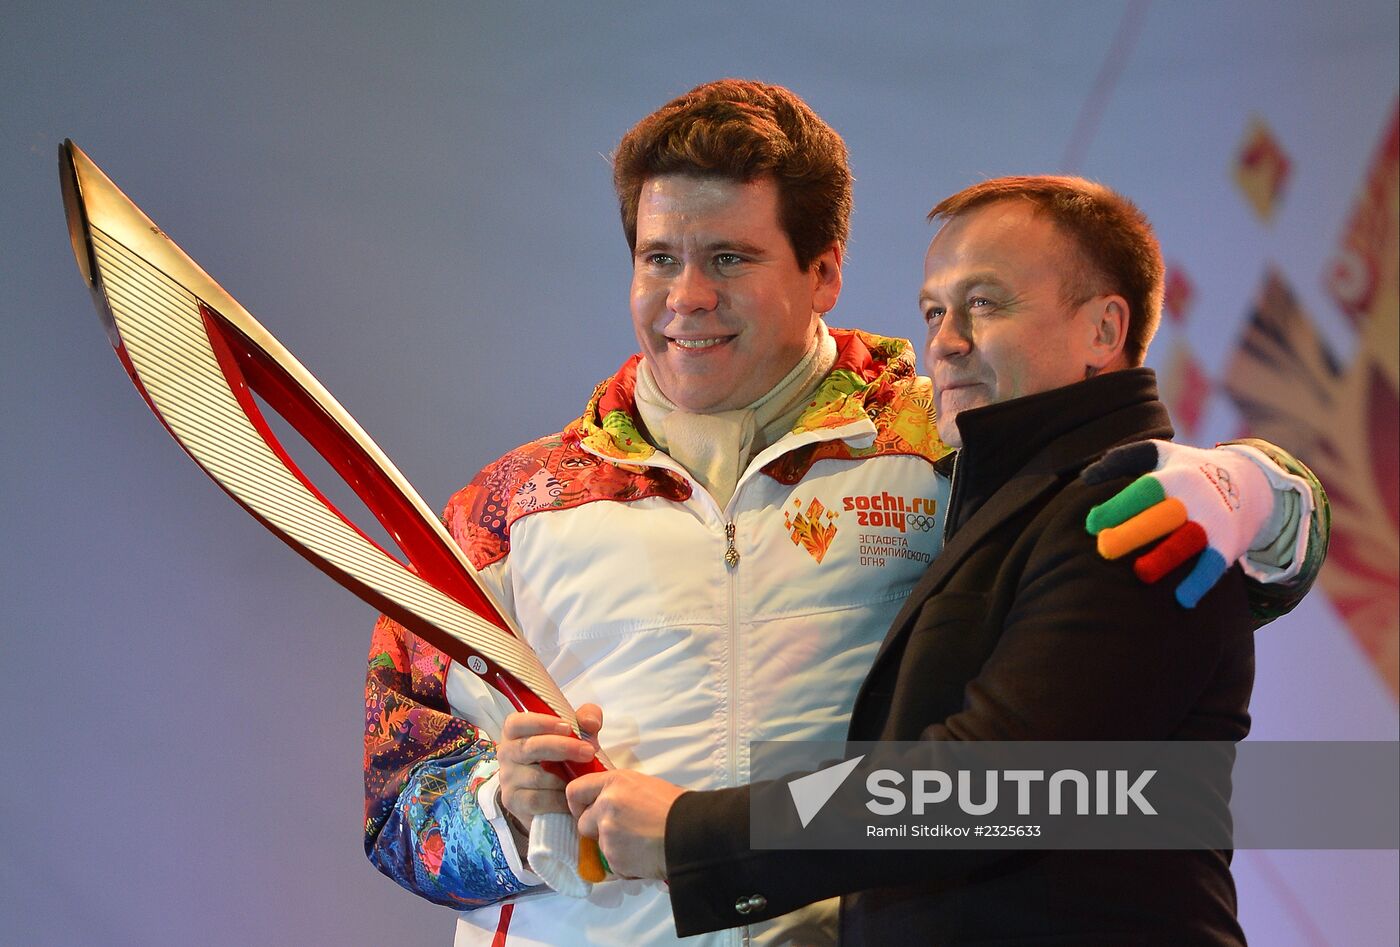 Sochi 2014 Olympic torch relay. Irkutsk